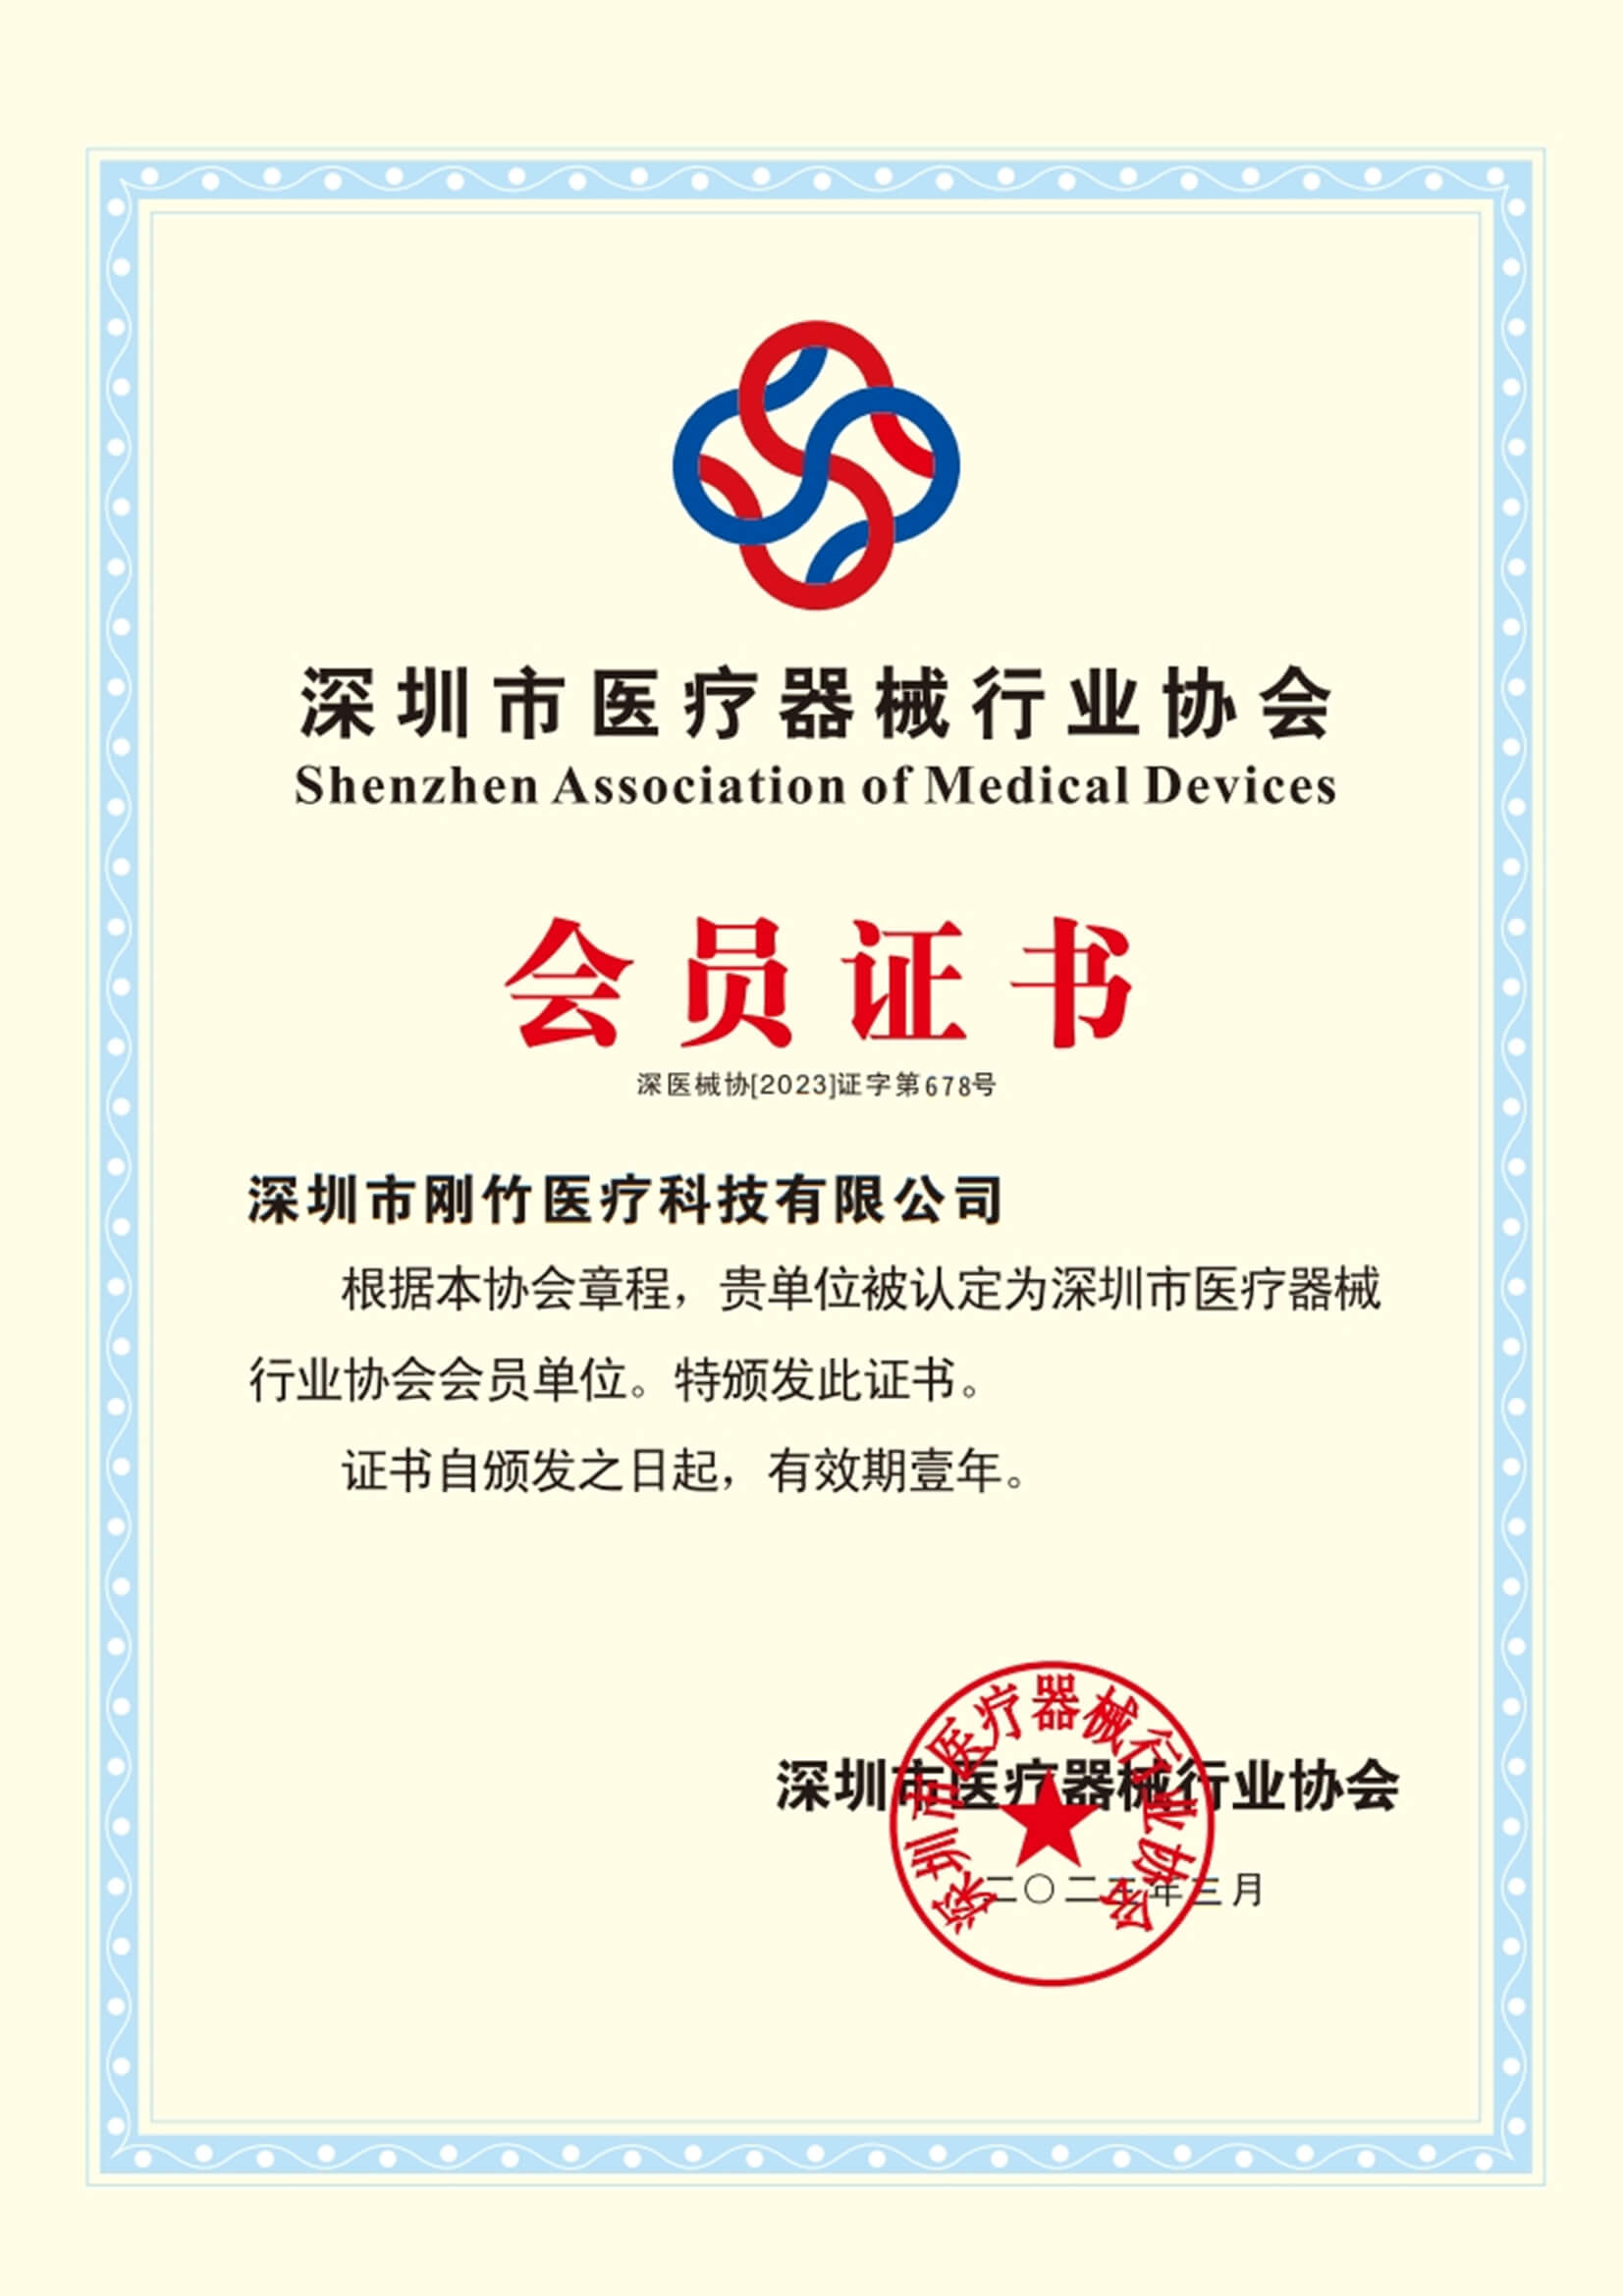 Shenzhen Association of Medical Devices